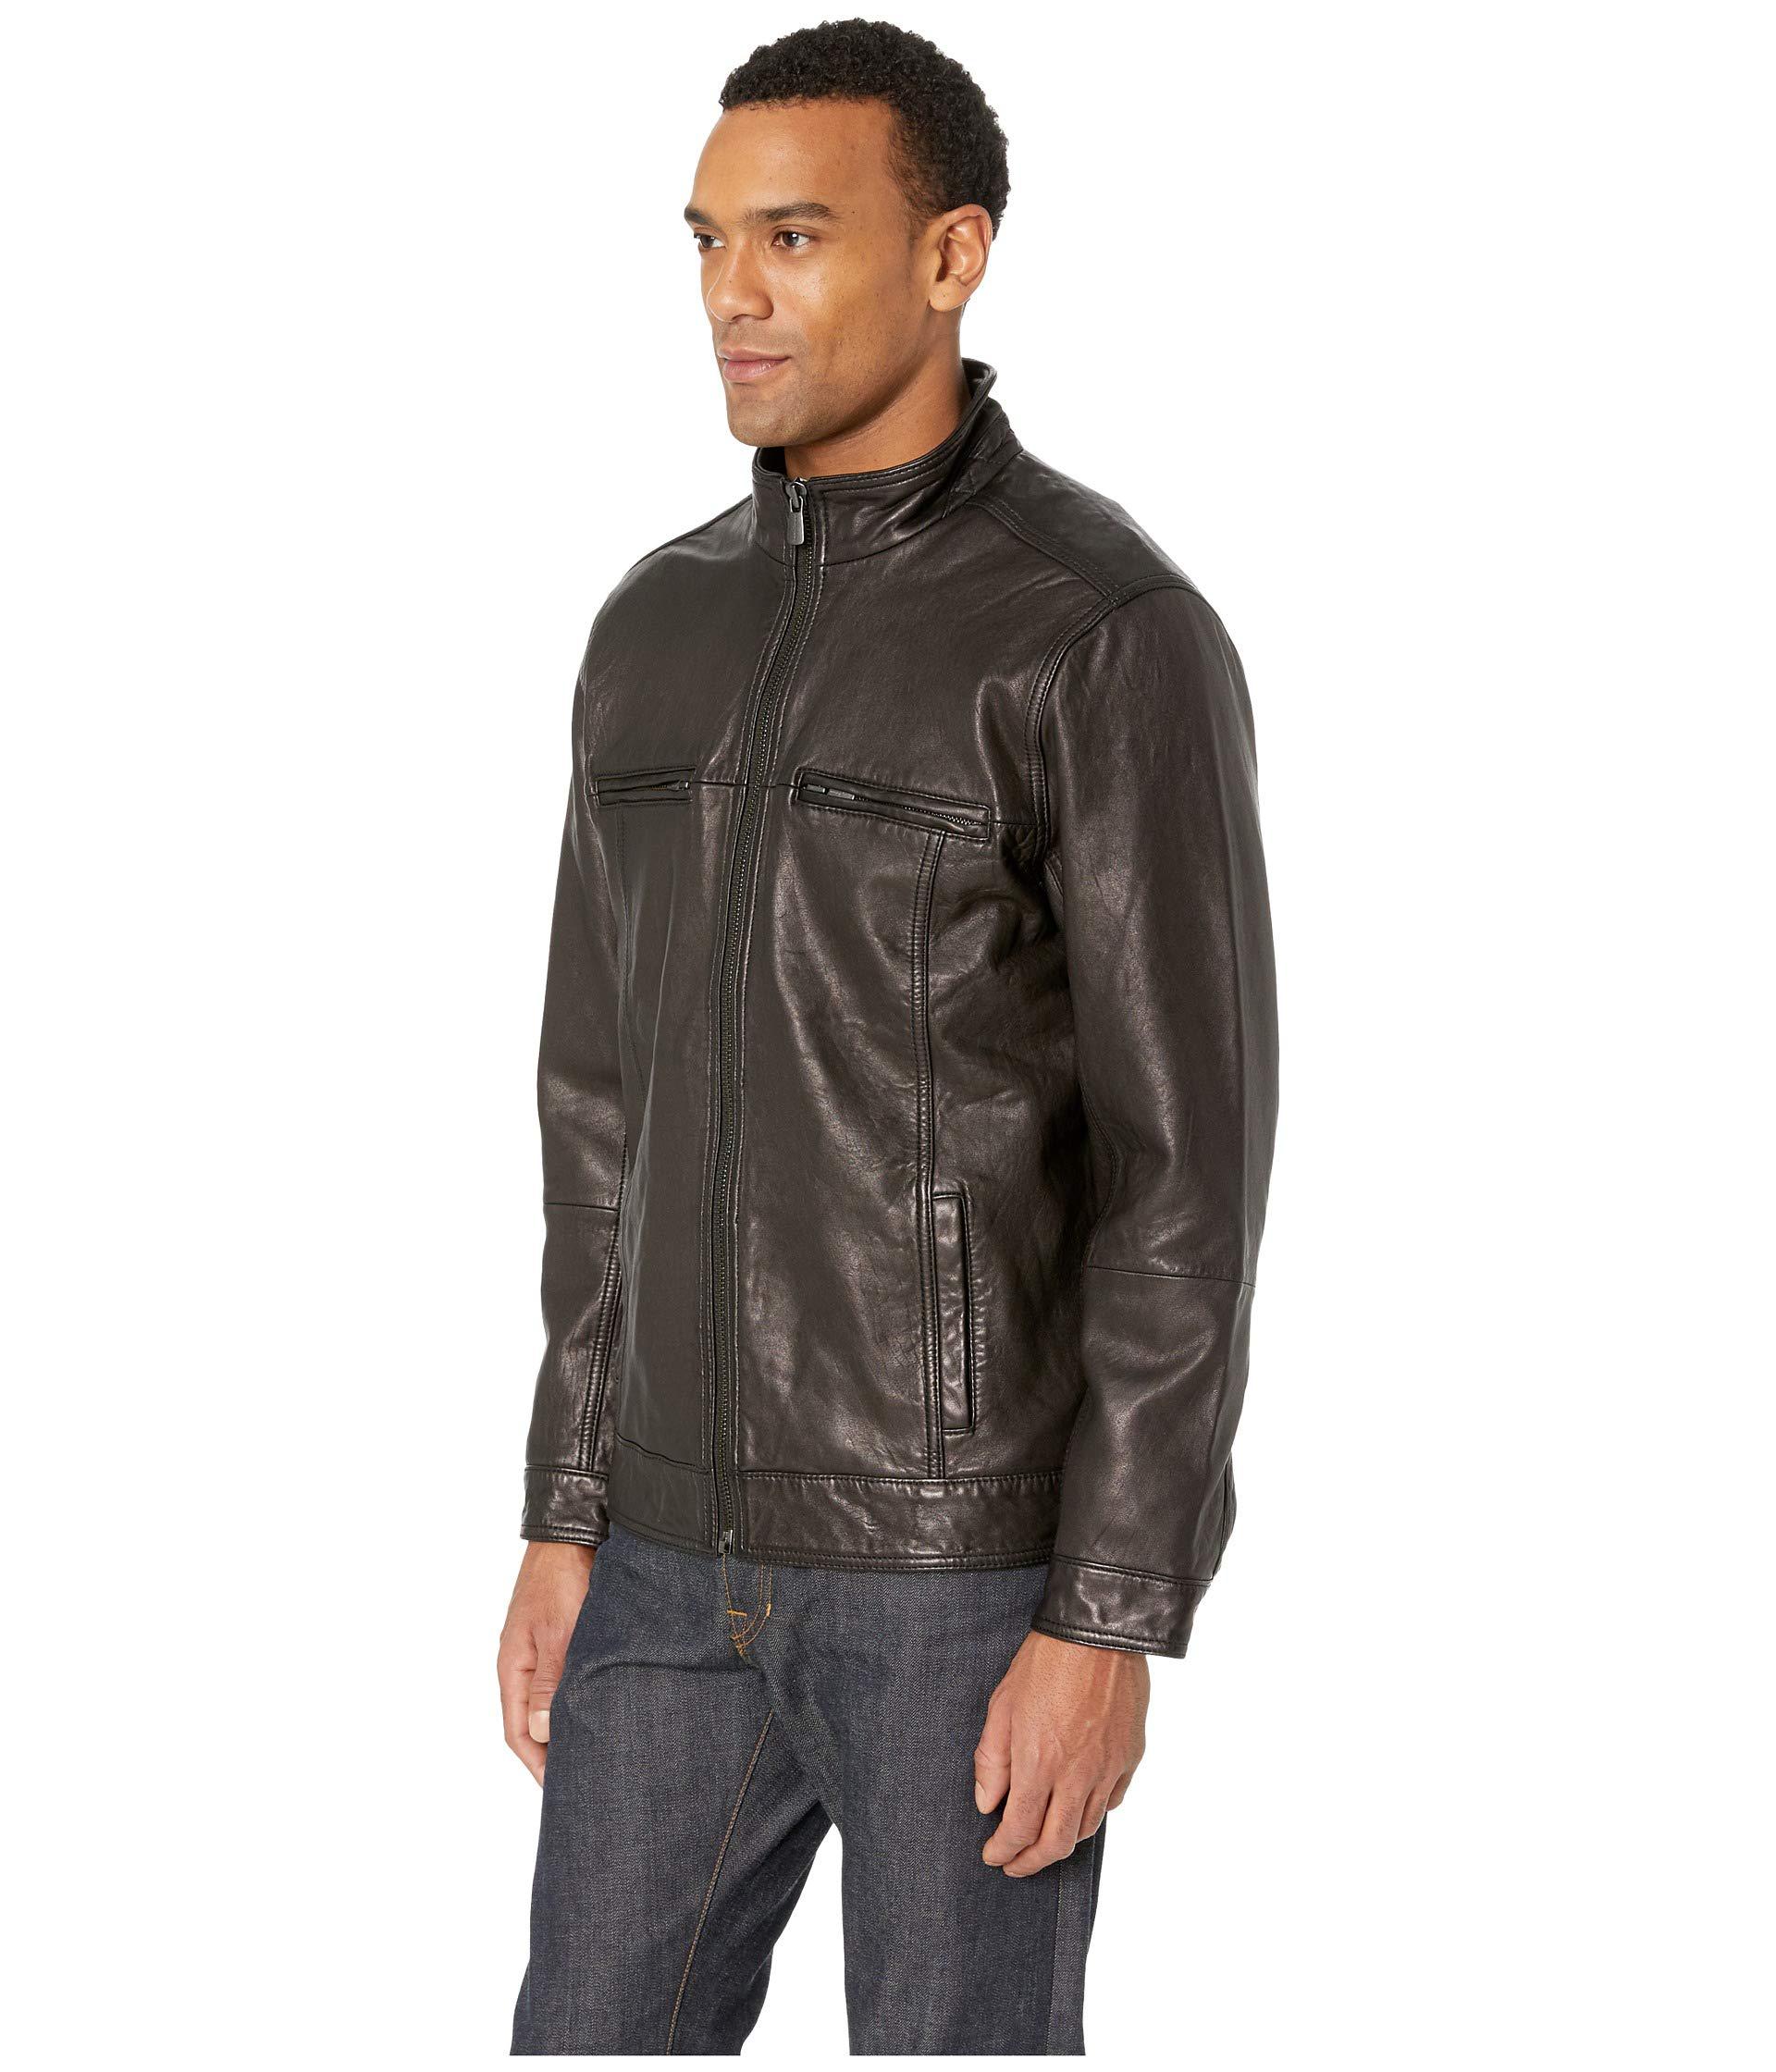 Tommy Bahama Rocker Highway Leather Jacket in Black for Men - Lyst